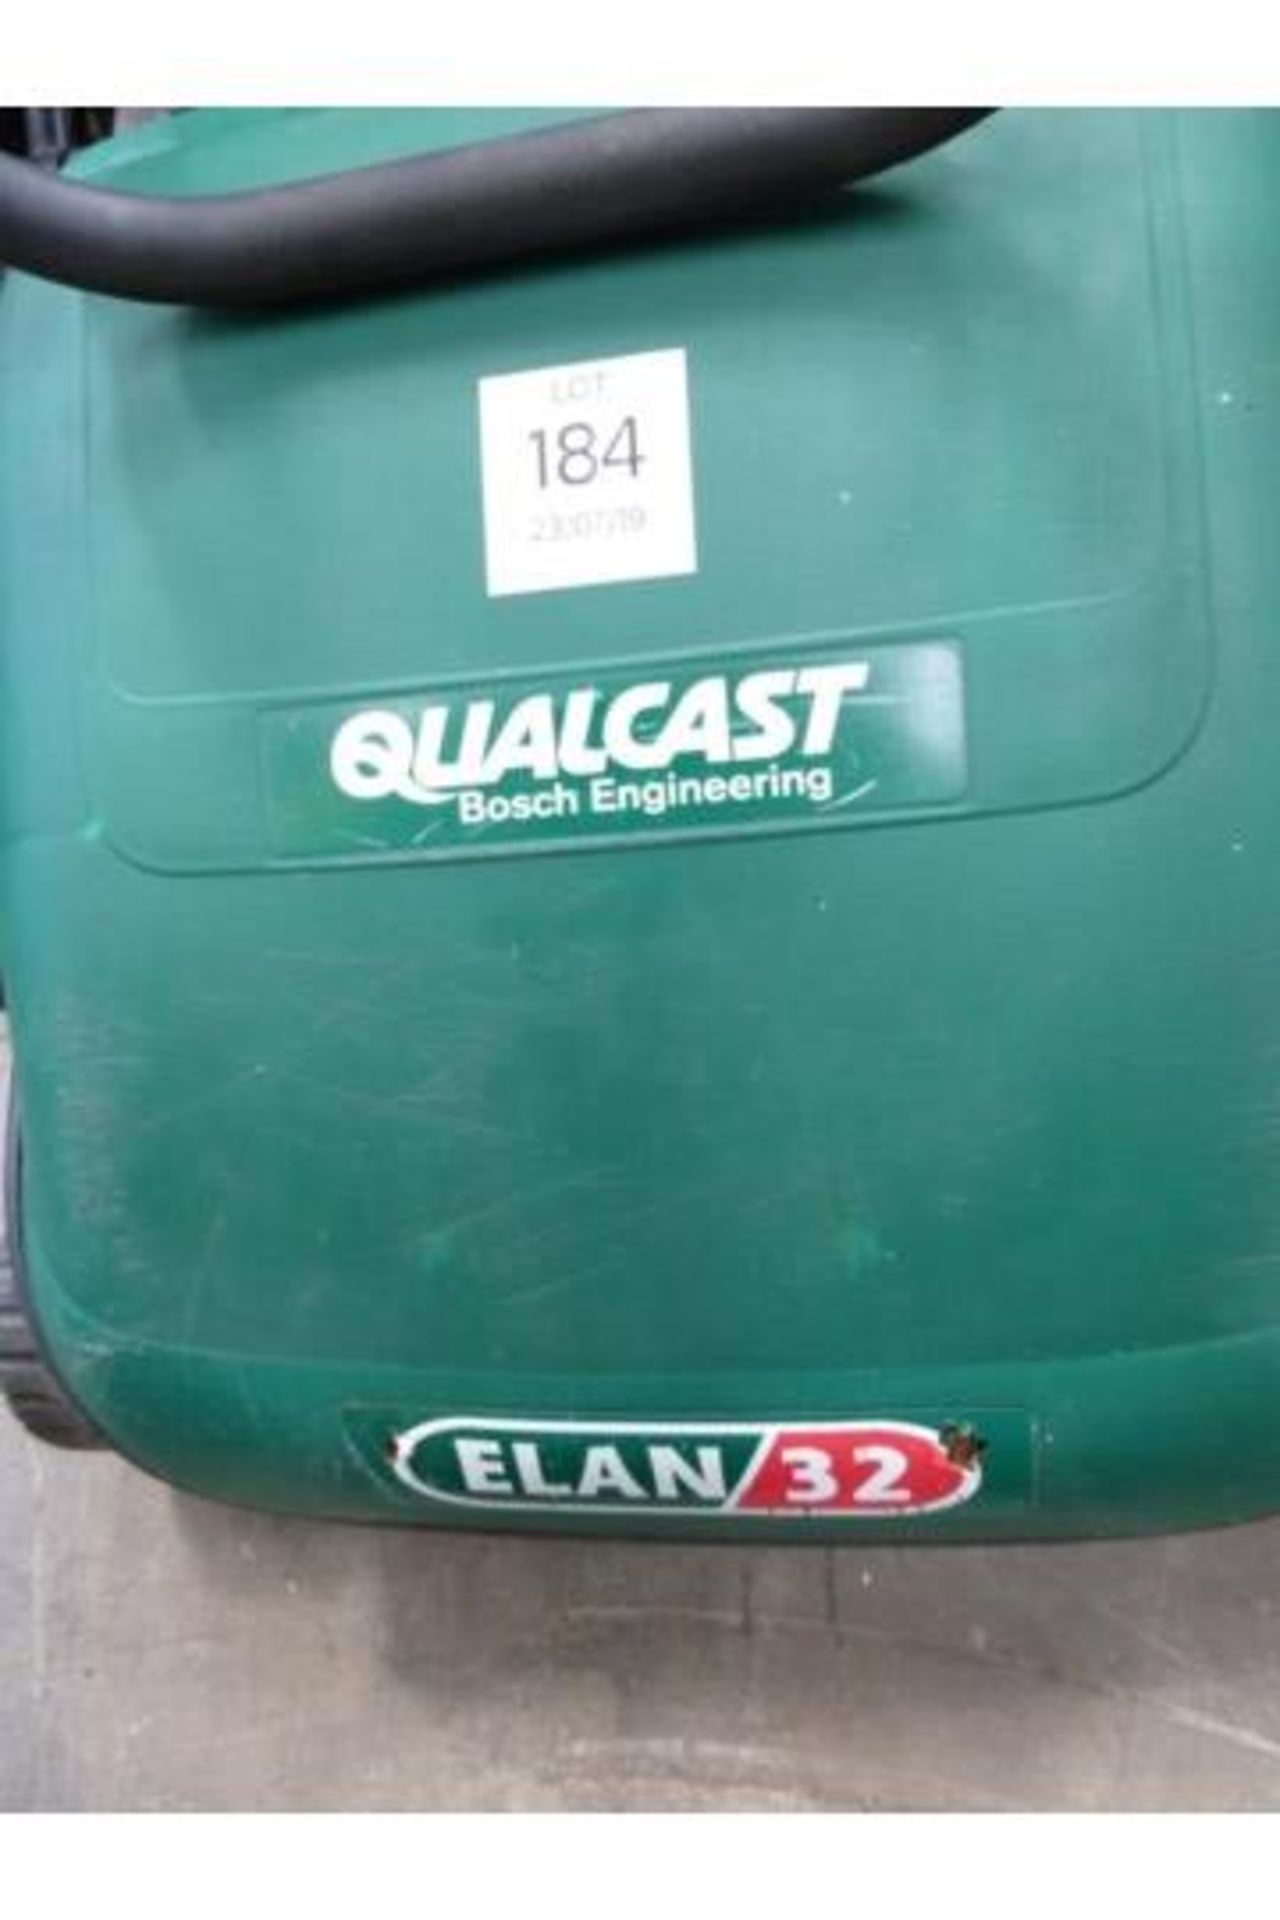 Qualcast ELAN32 12" Cylinder Mower with box - Image 3 of 3